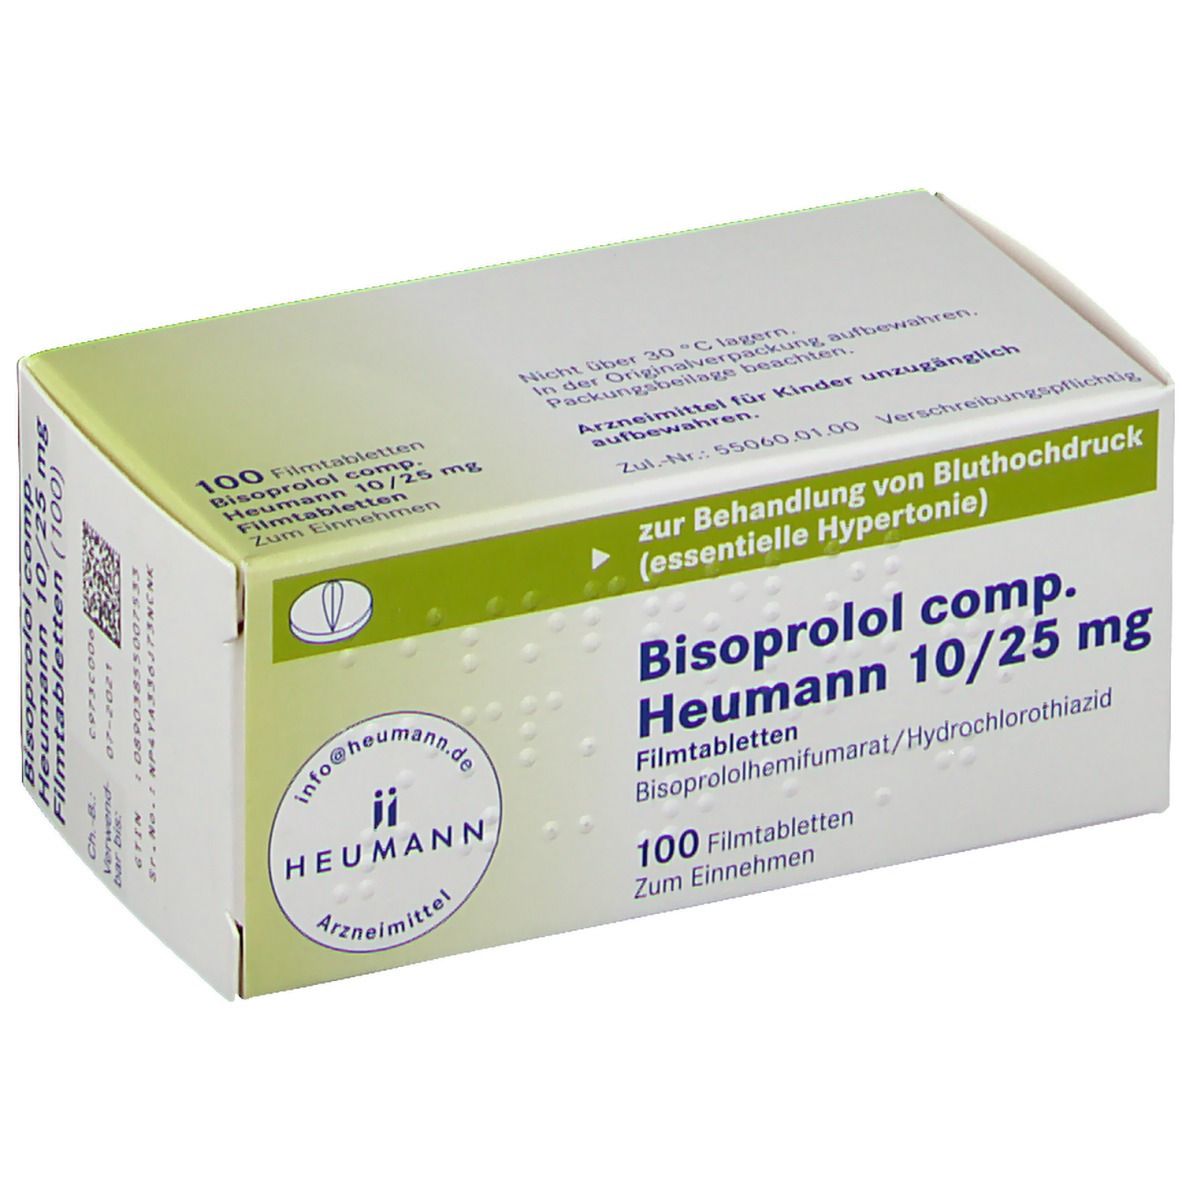 Bisoprolol comp. Heumann 10/25 mg